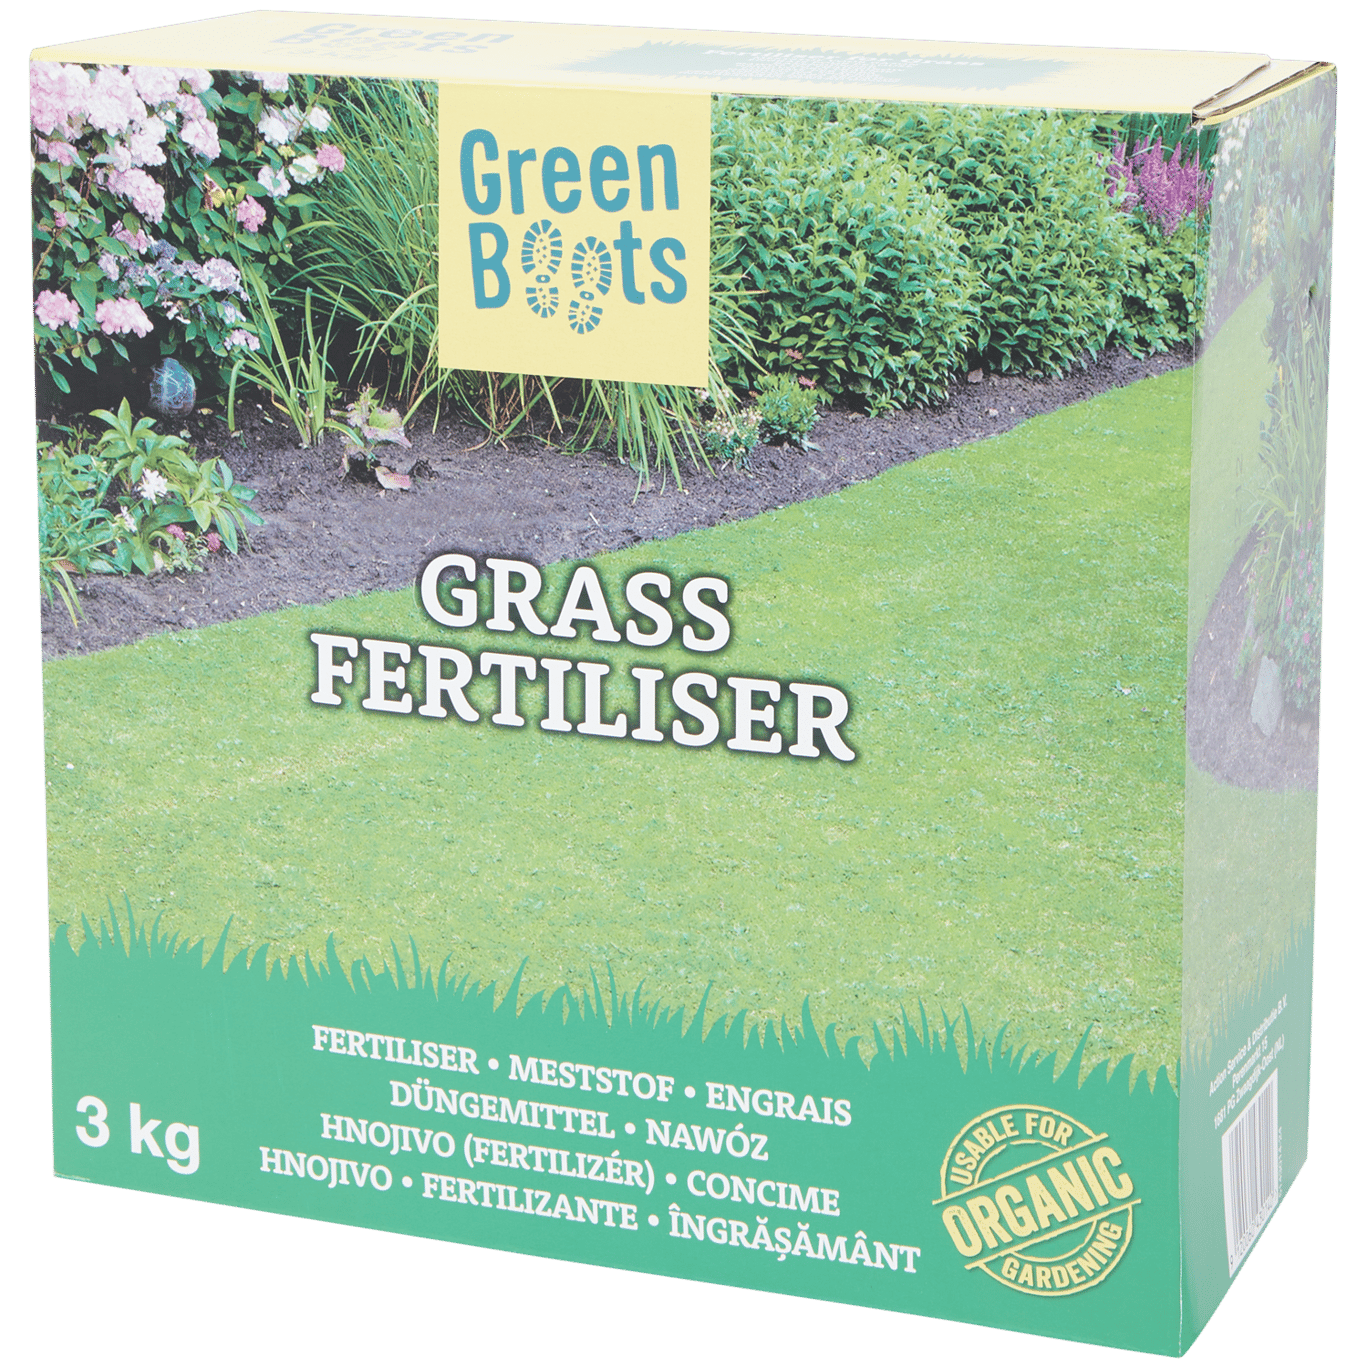 Gránulos de fertilizante de césped Green Boots